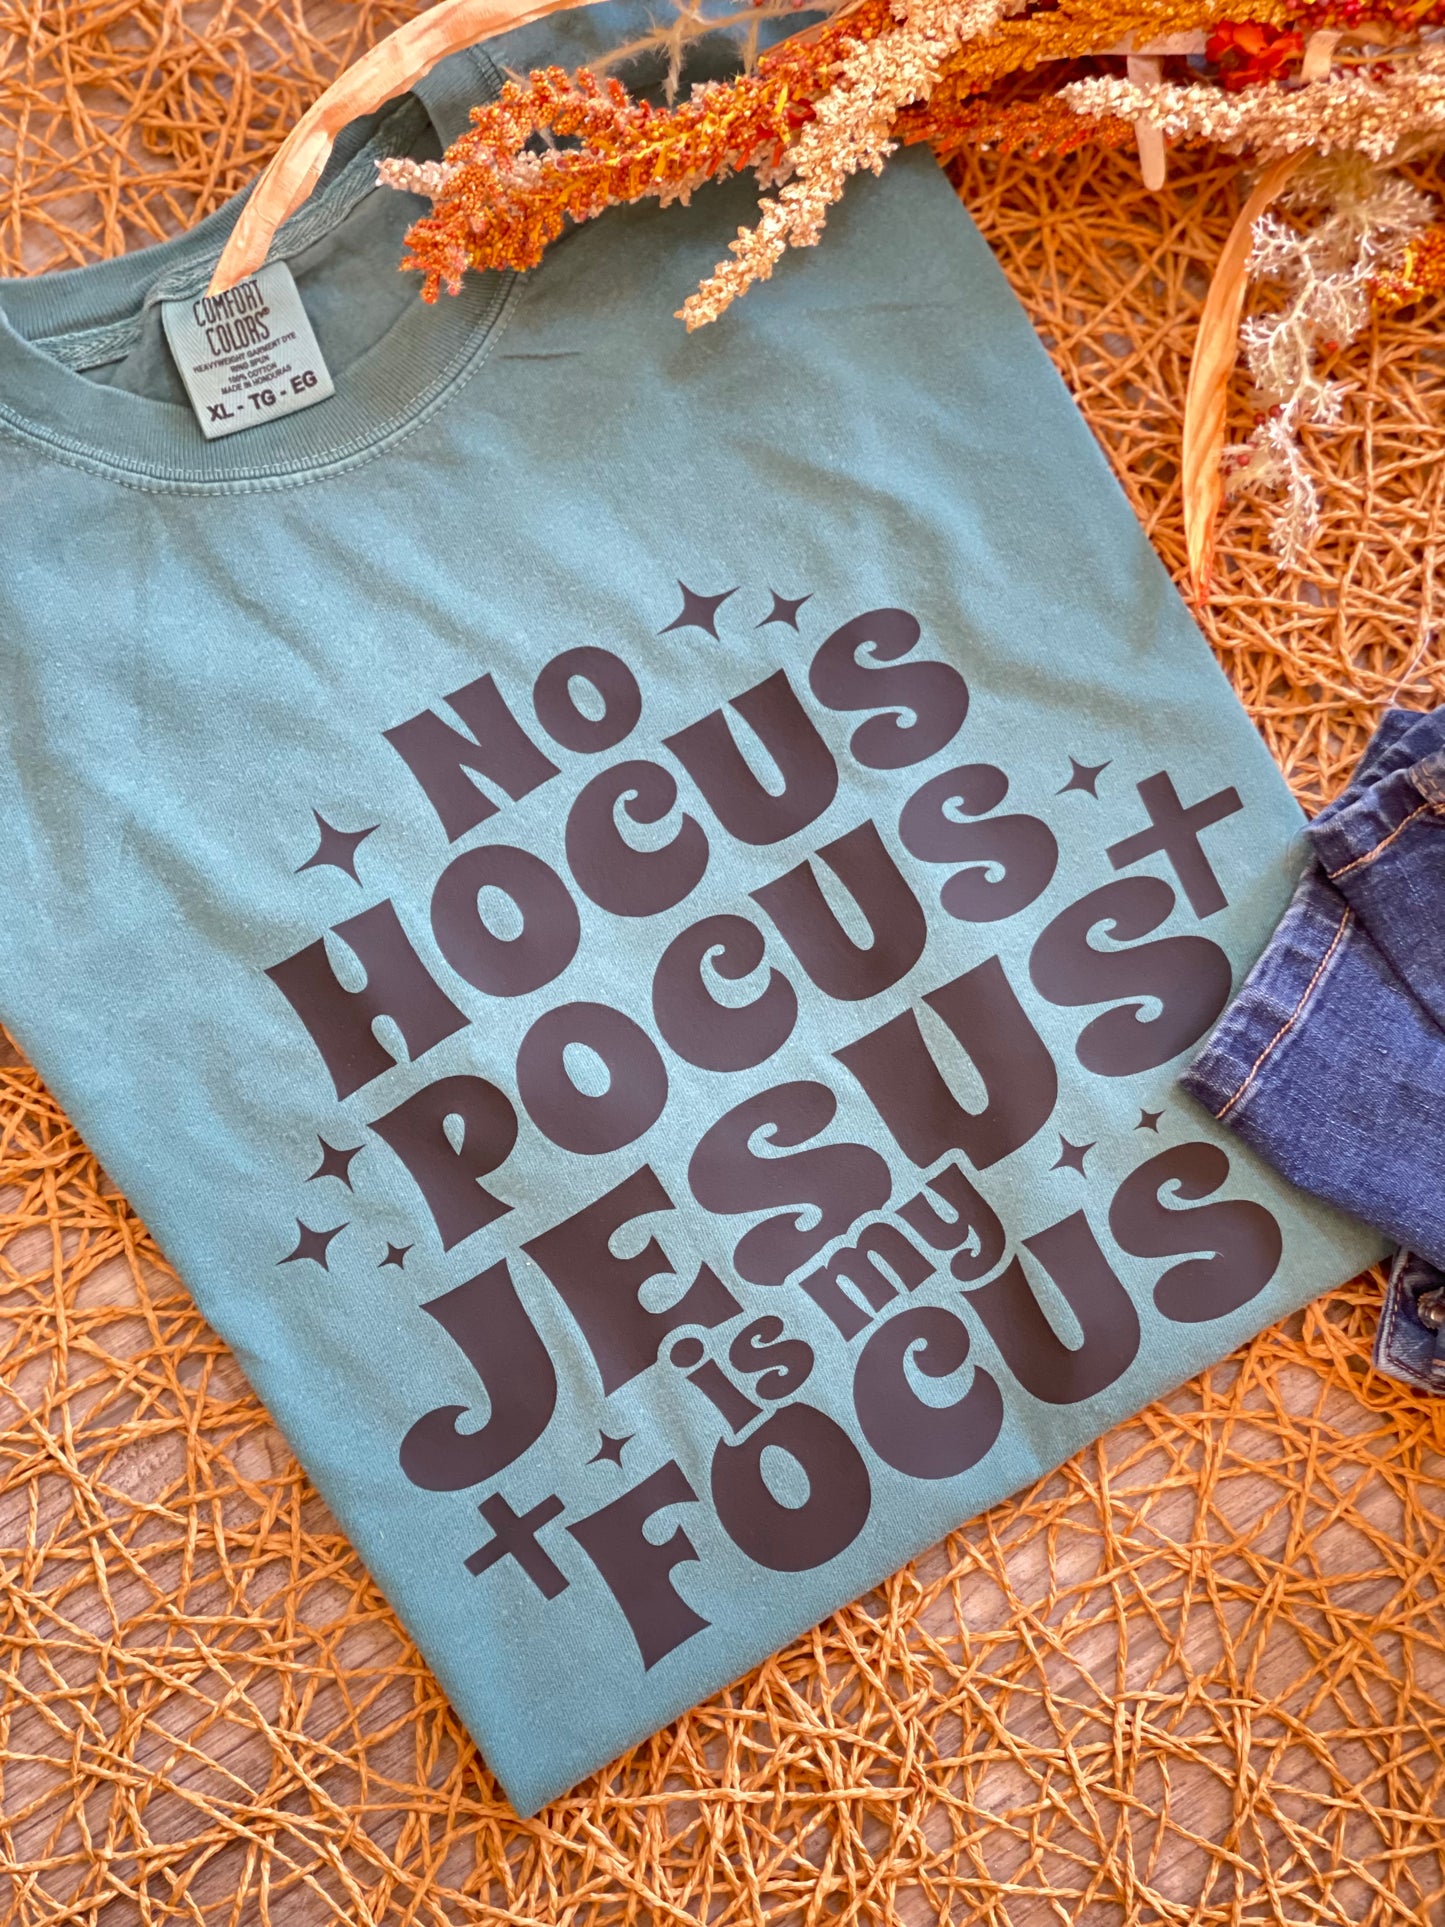 No Hocus Pocus-Tee